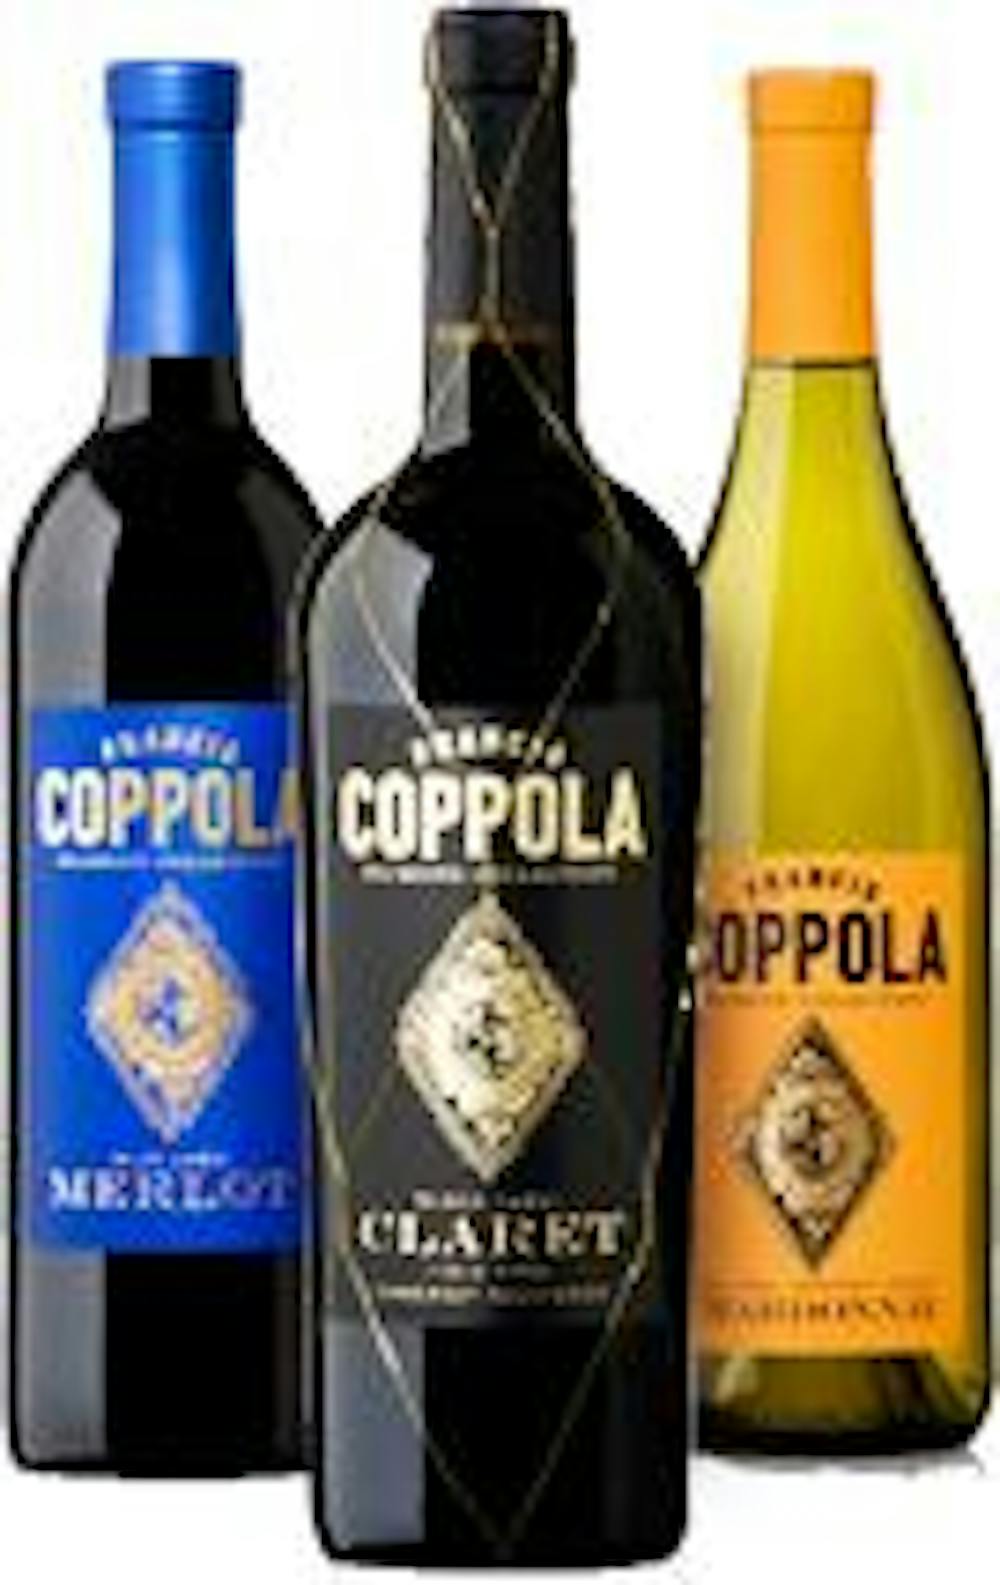 coppola wine black label